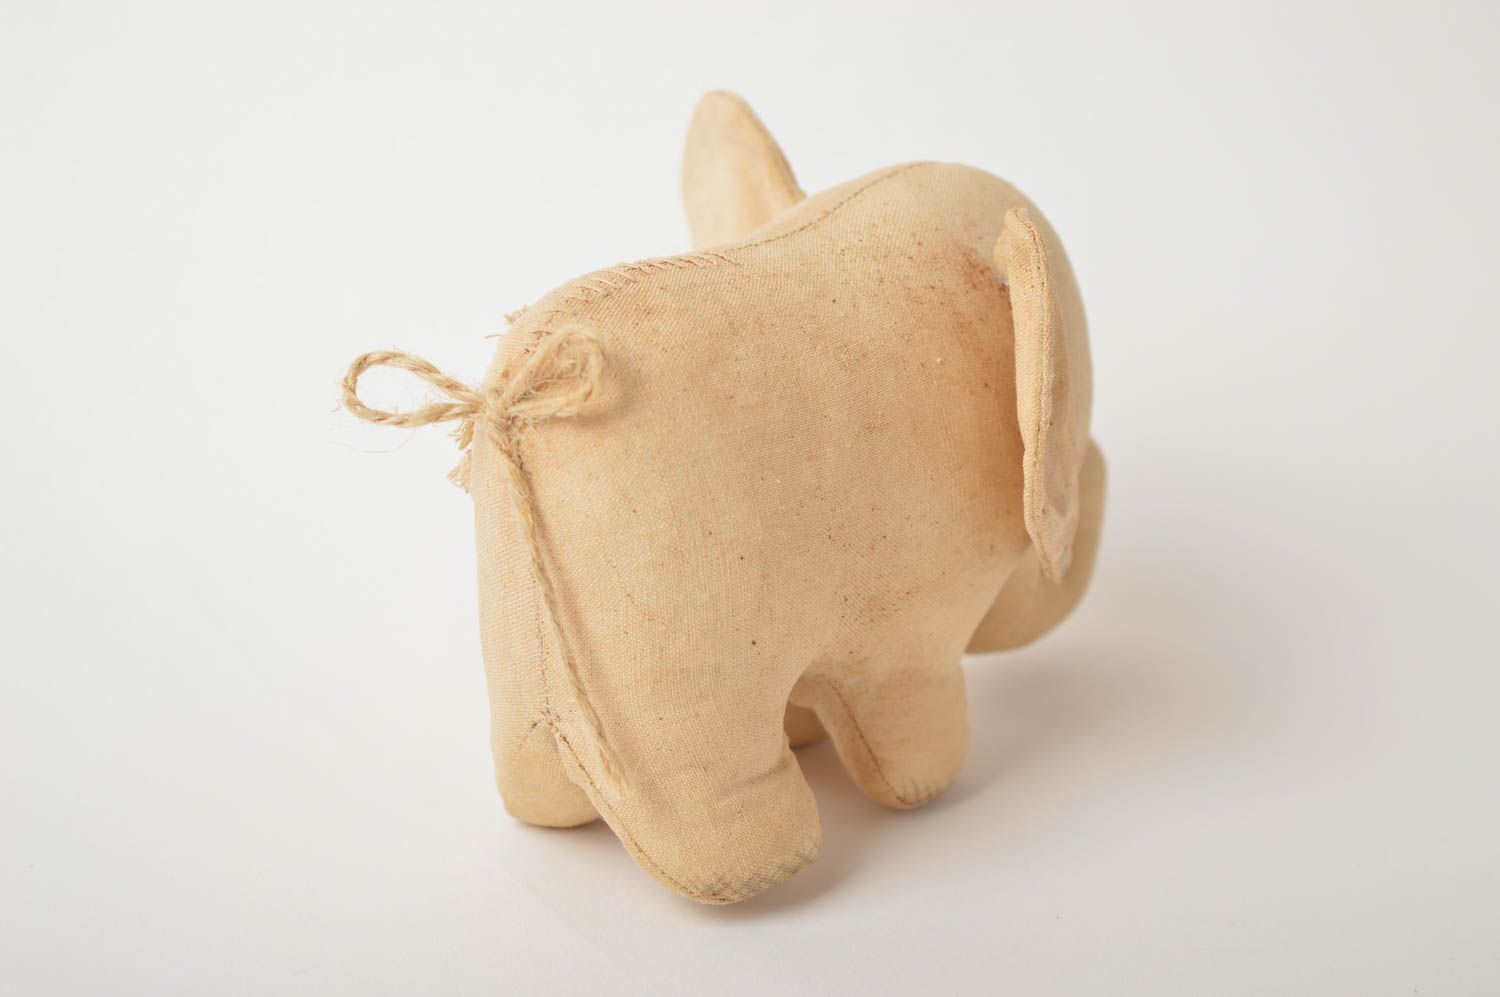 Handmade cute soft toy elephant stuffed toy for children home decor ideas photo 4